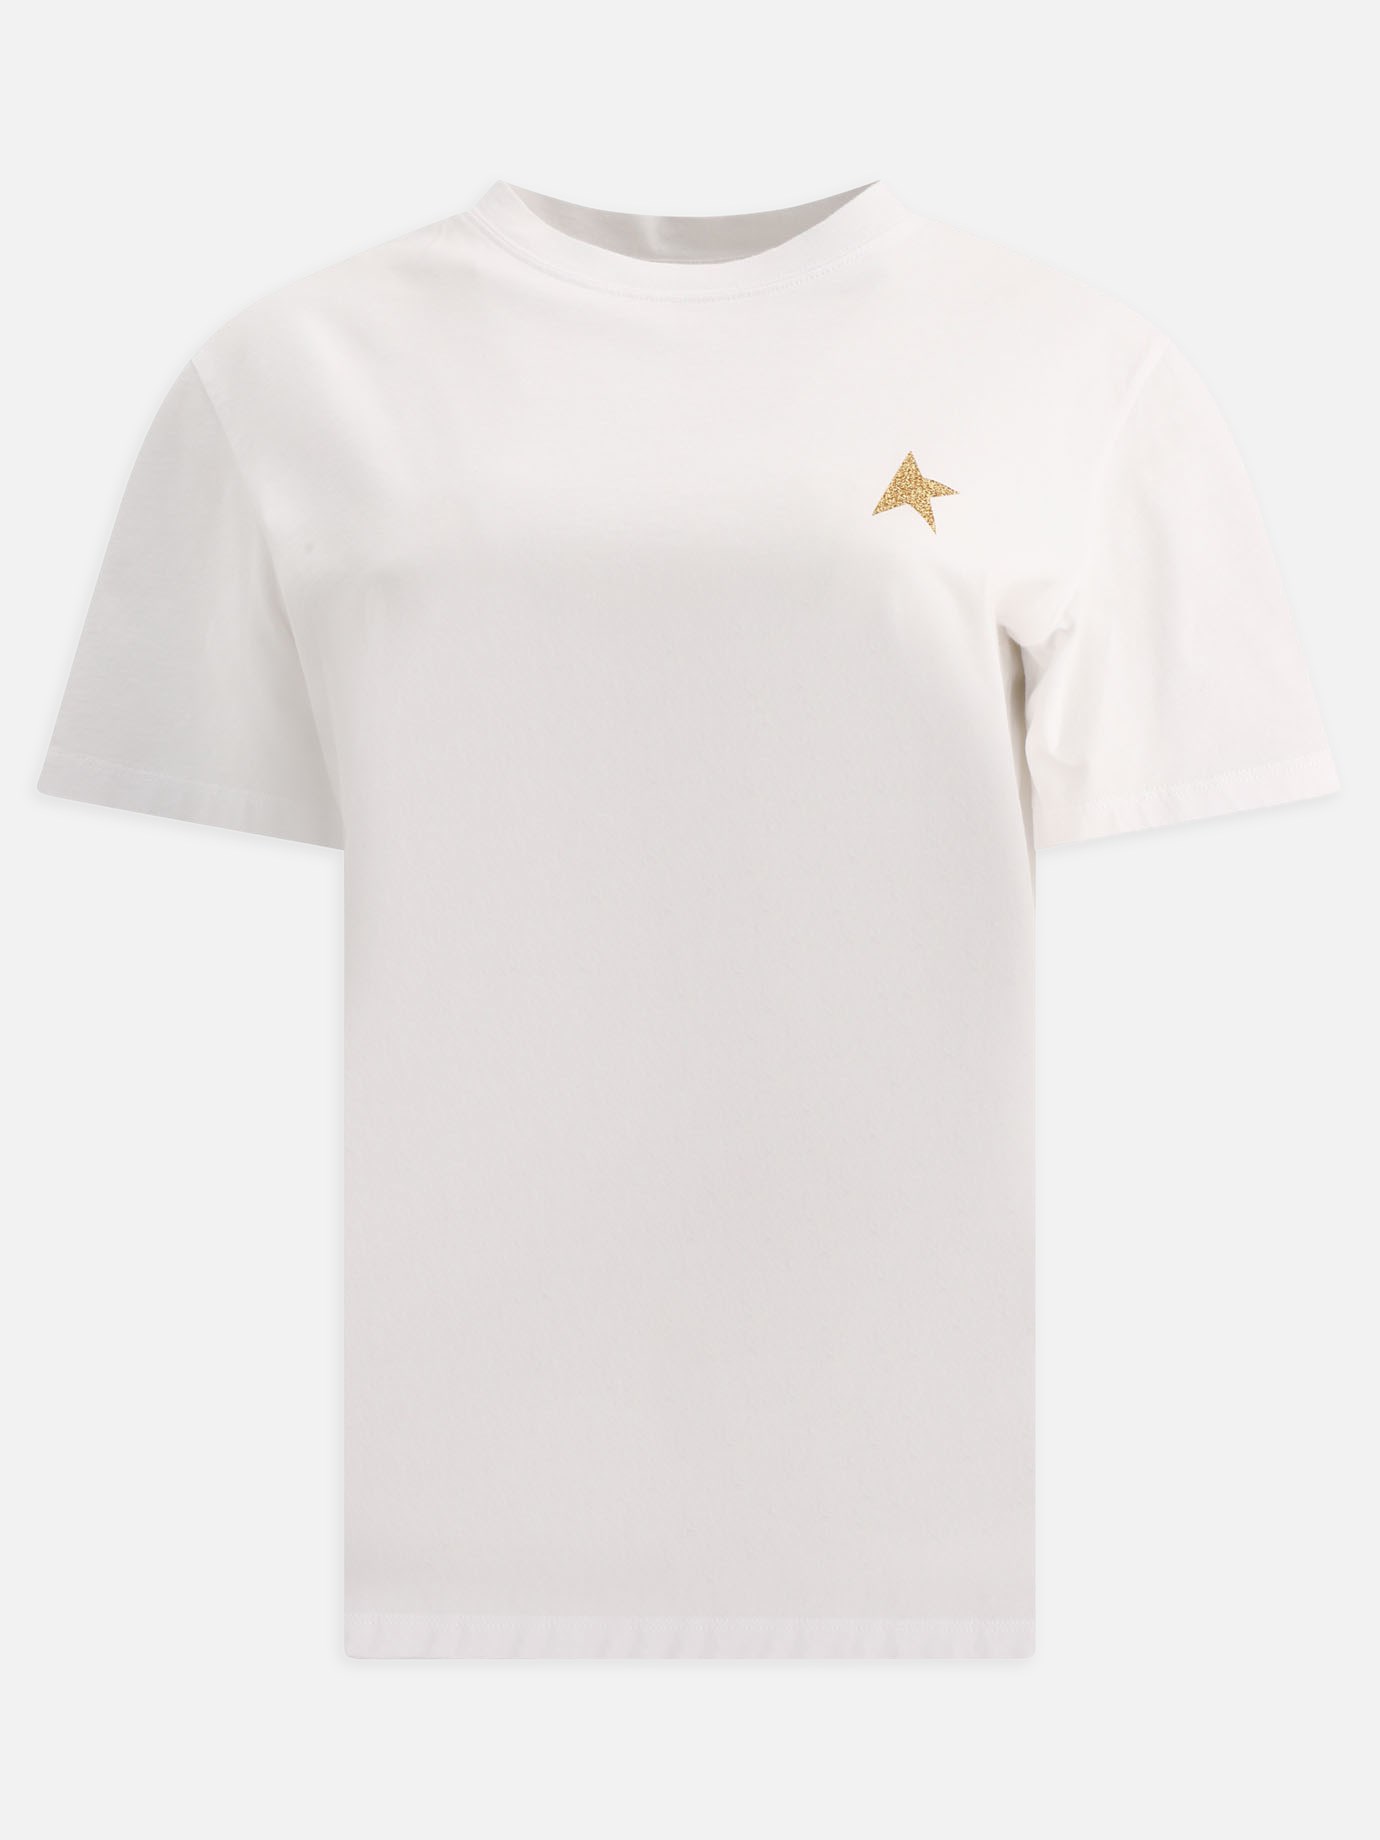 T-shirt  Glittered Star by Golden Goose - 5